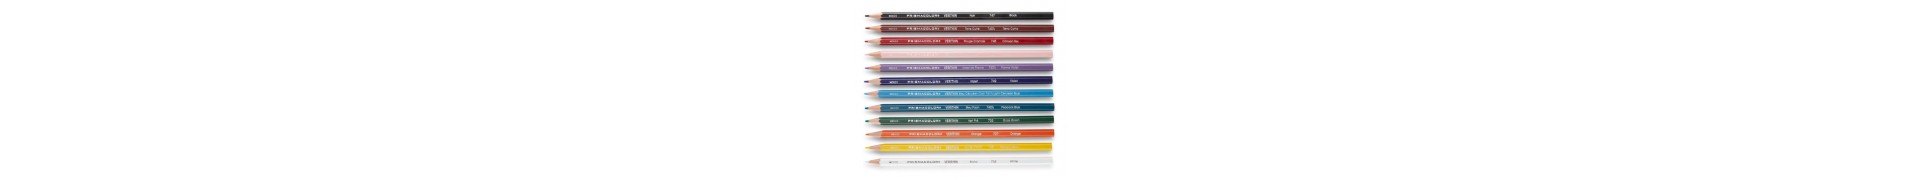 Crayon de couleur PRISMACOLOR Verithin - Bleu marine II 